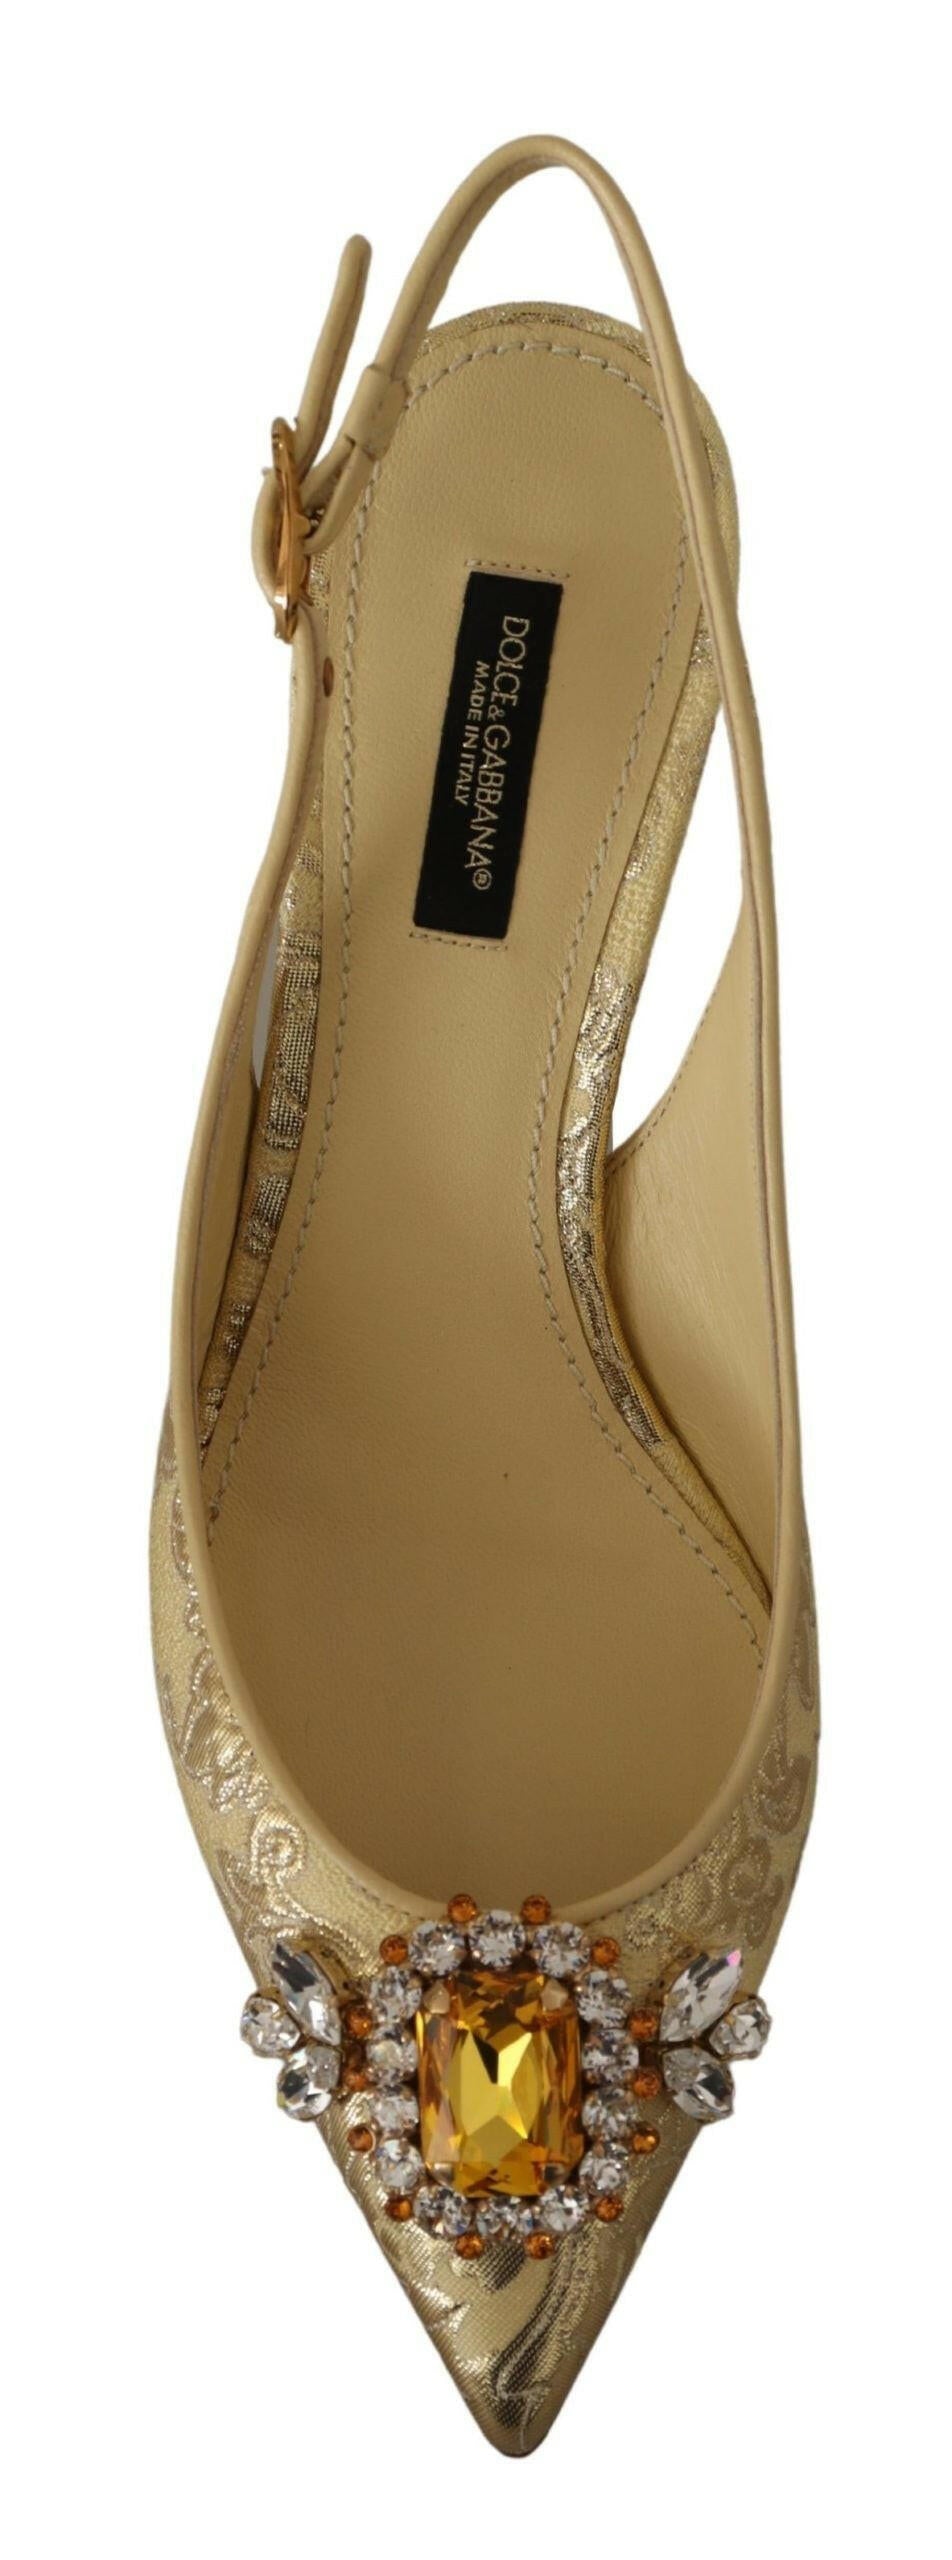 Dolce & Gabbana Gold Crystal Slingbacks Pumps Heels Shoes - GENUINE AUTHENTIC BRAND LLC  